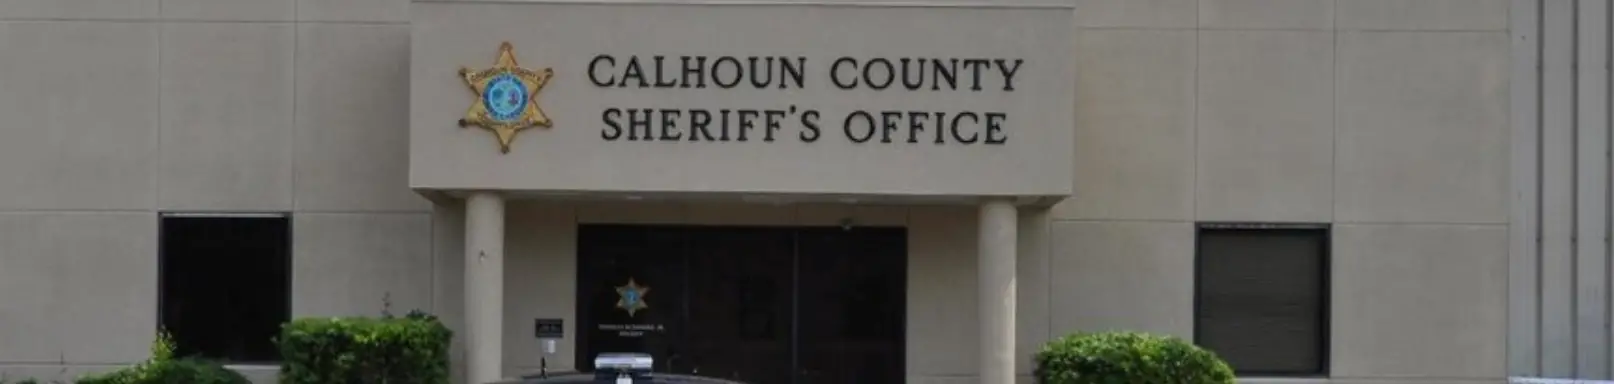 Photos Calhoun County Sheriff 1